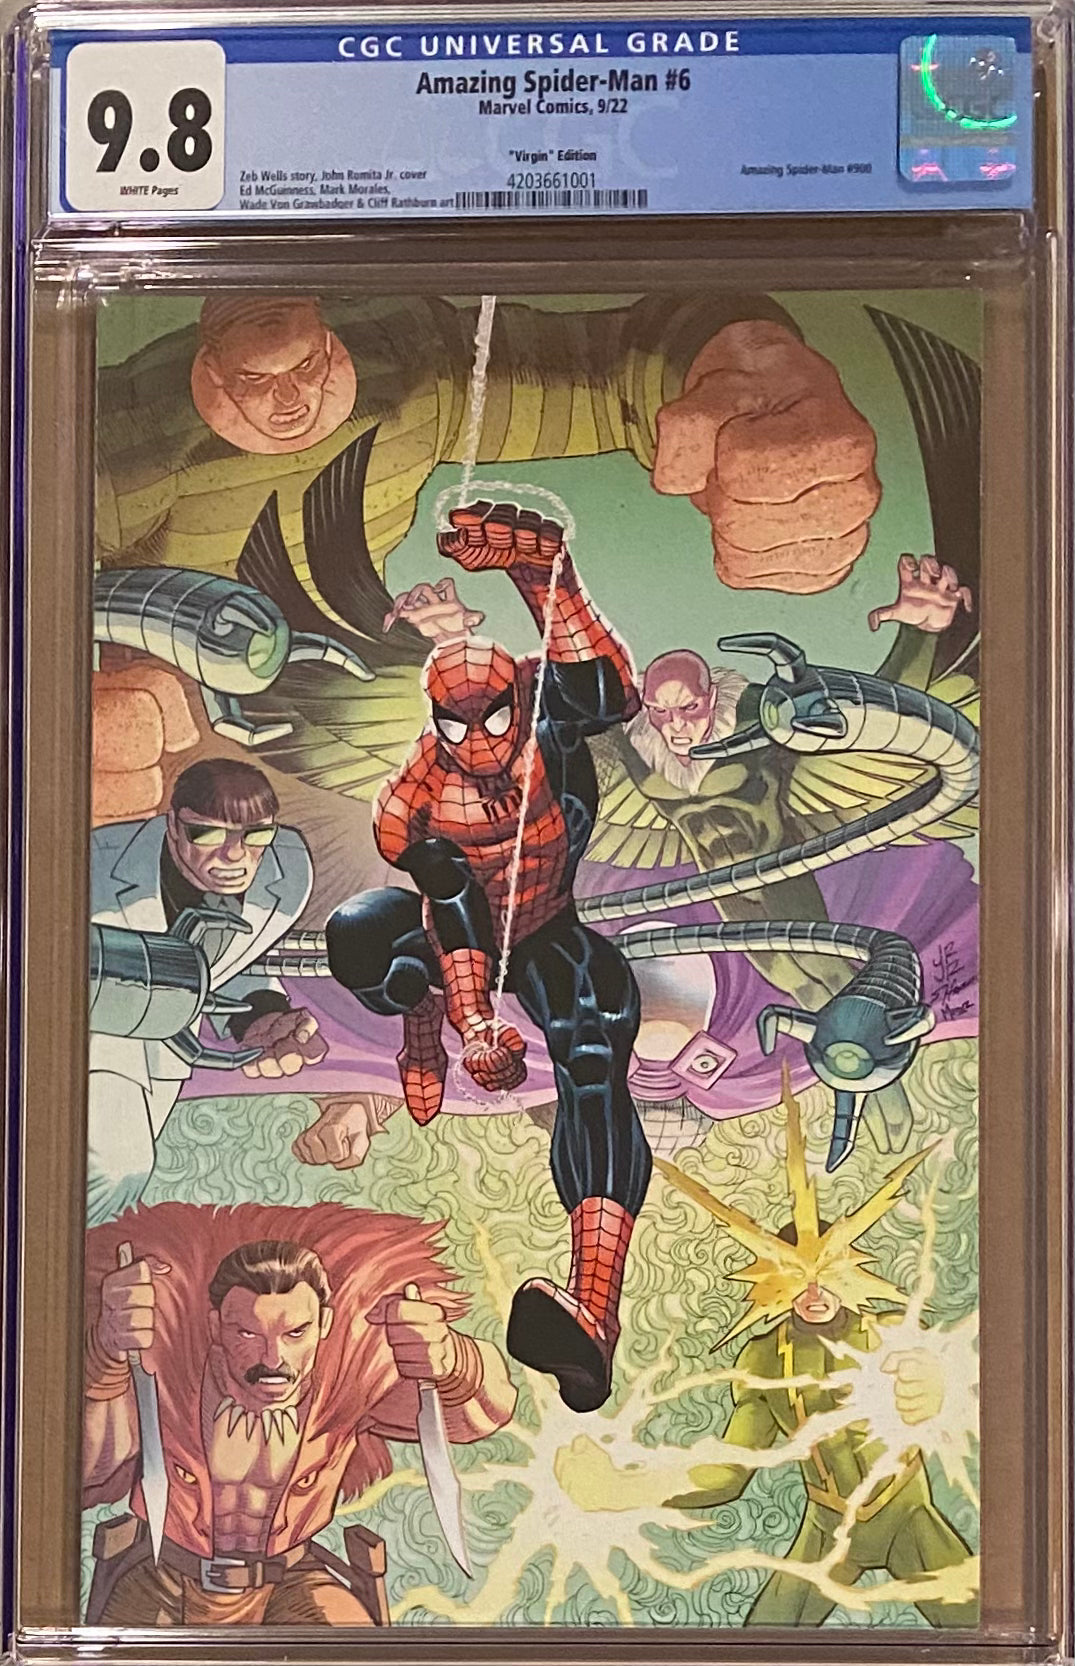 Amazing Spider-Man #6 (#900) Romita Jr. 1:100 Virgin Retailer Incentive Variant CGC 9.8